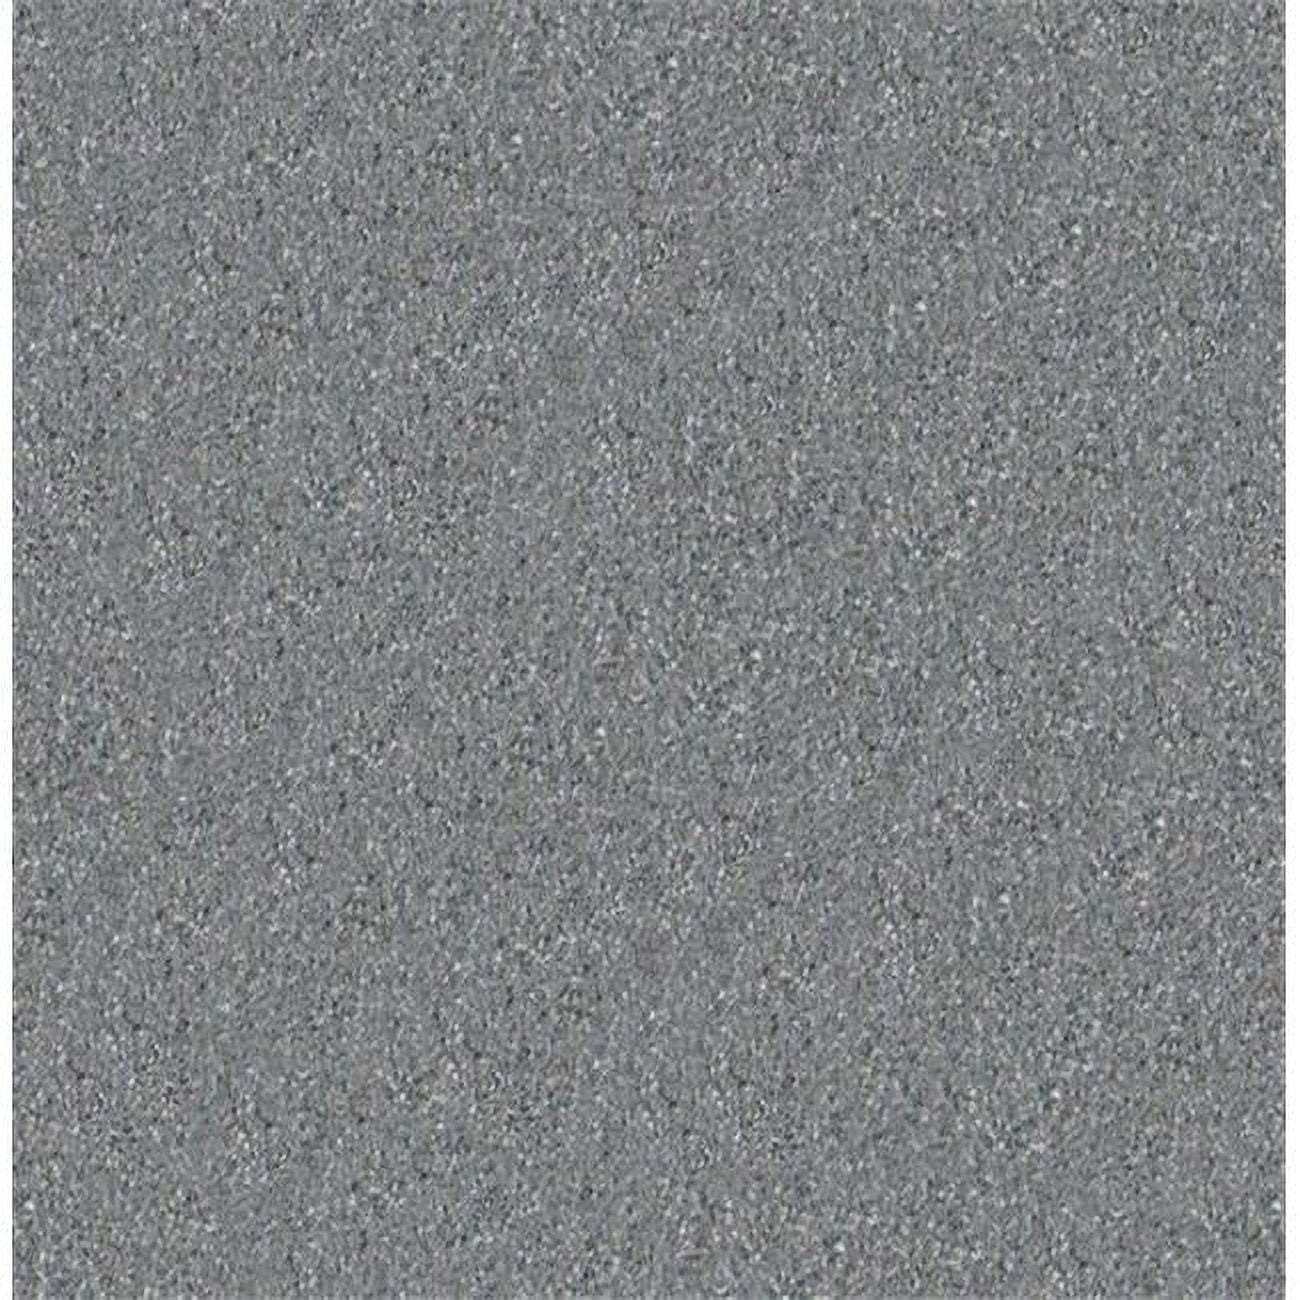 Cf2448px-55 0.75 In. High Pressure Rectangular Top Folding Tables, Montana Granite - 24 X 48 In.